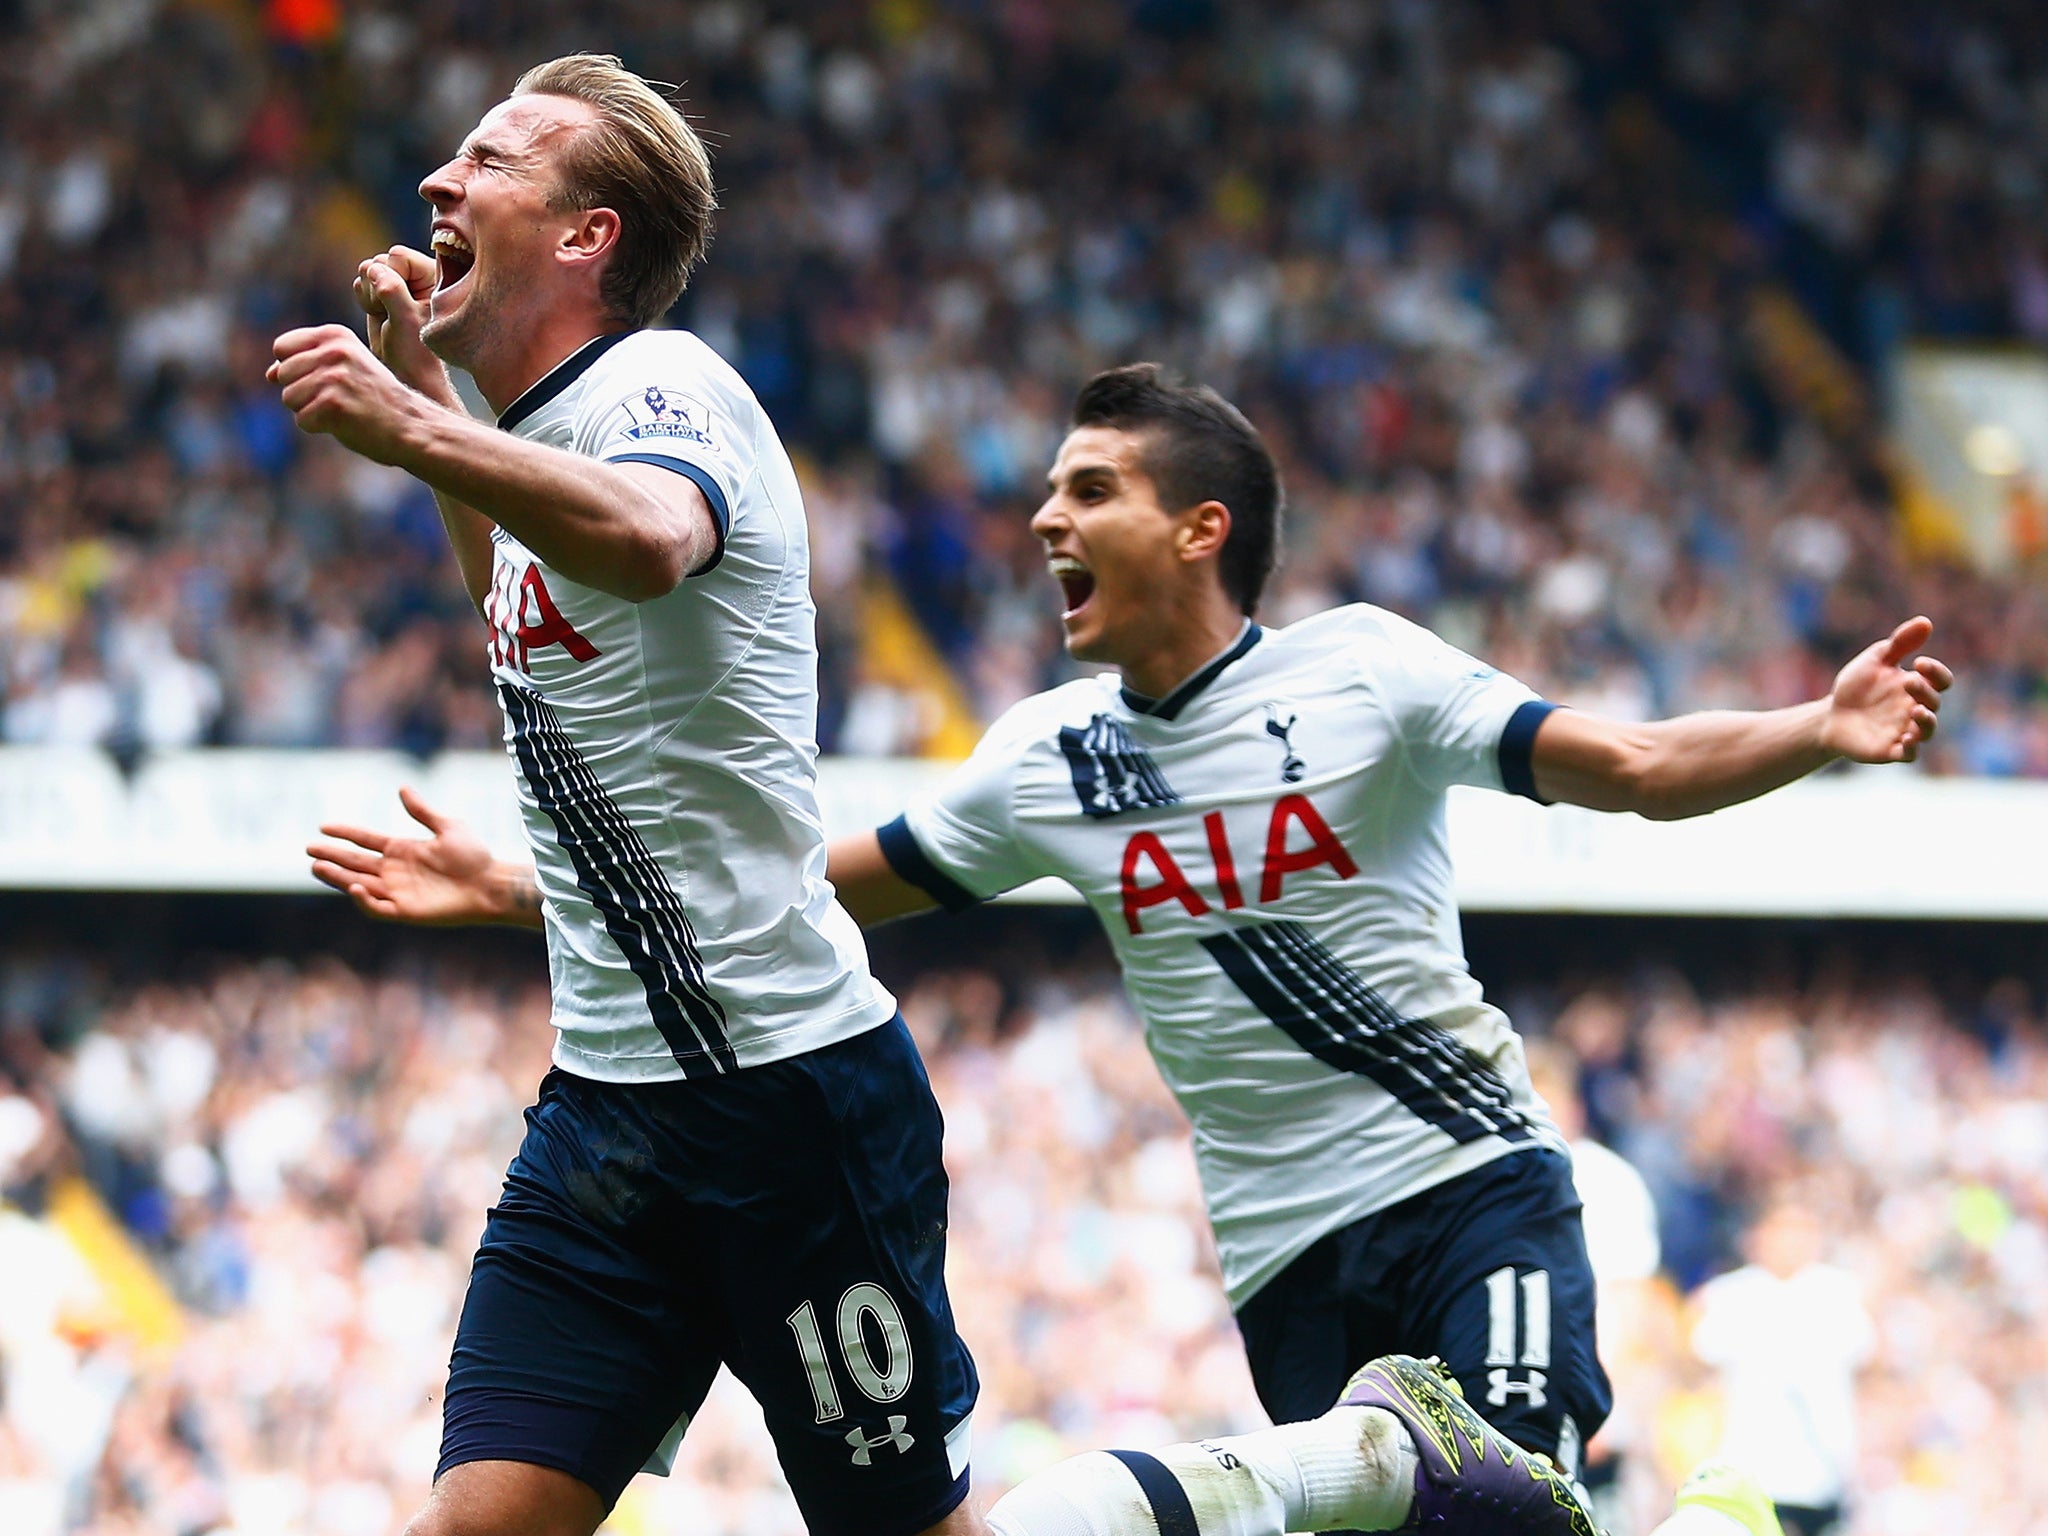 Harry Kane celebrates his goal for Tottenham